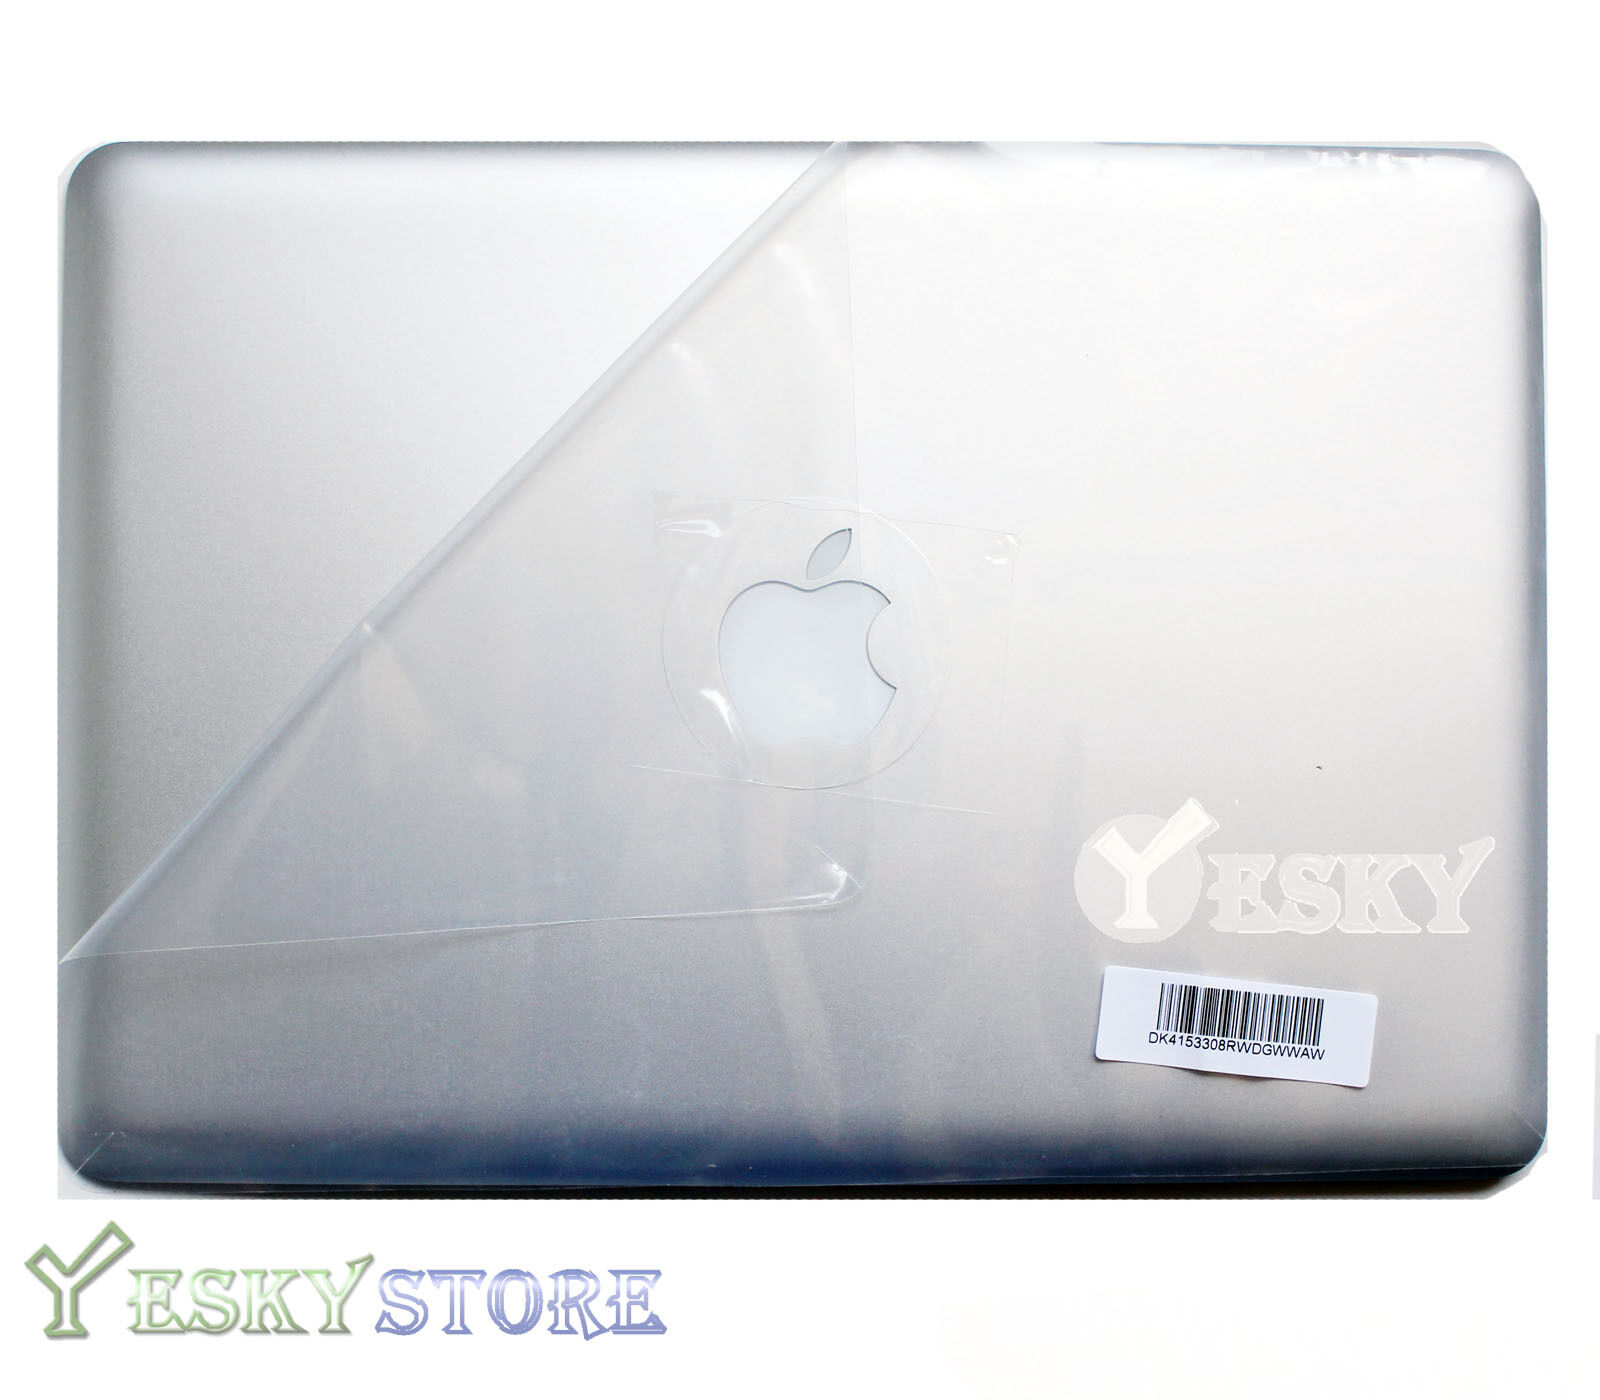 NEW OEM Original Apple MacBook Pro 13